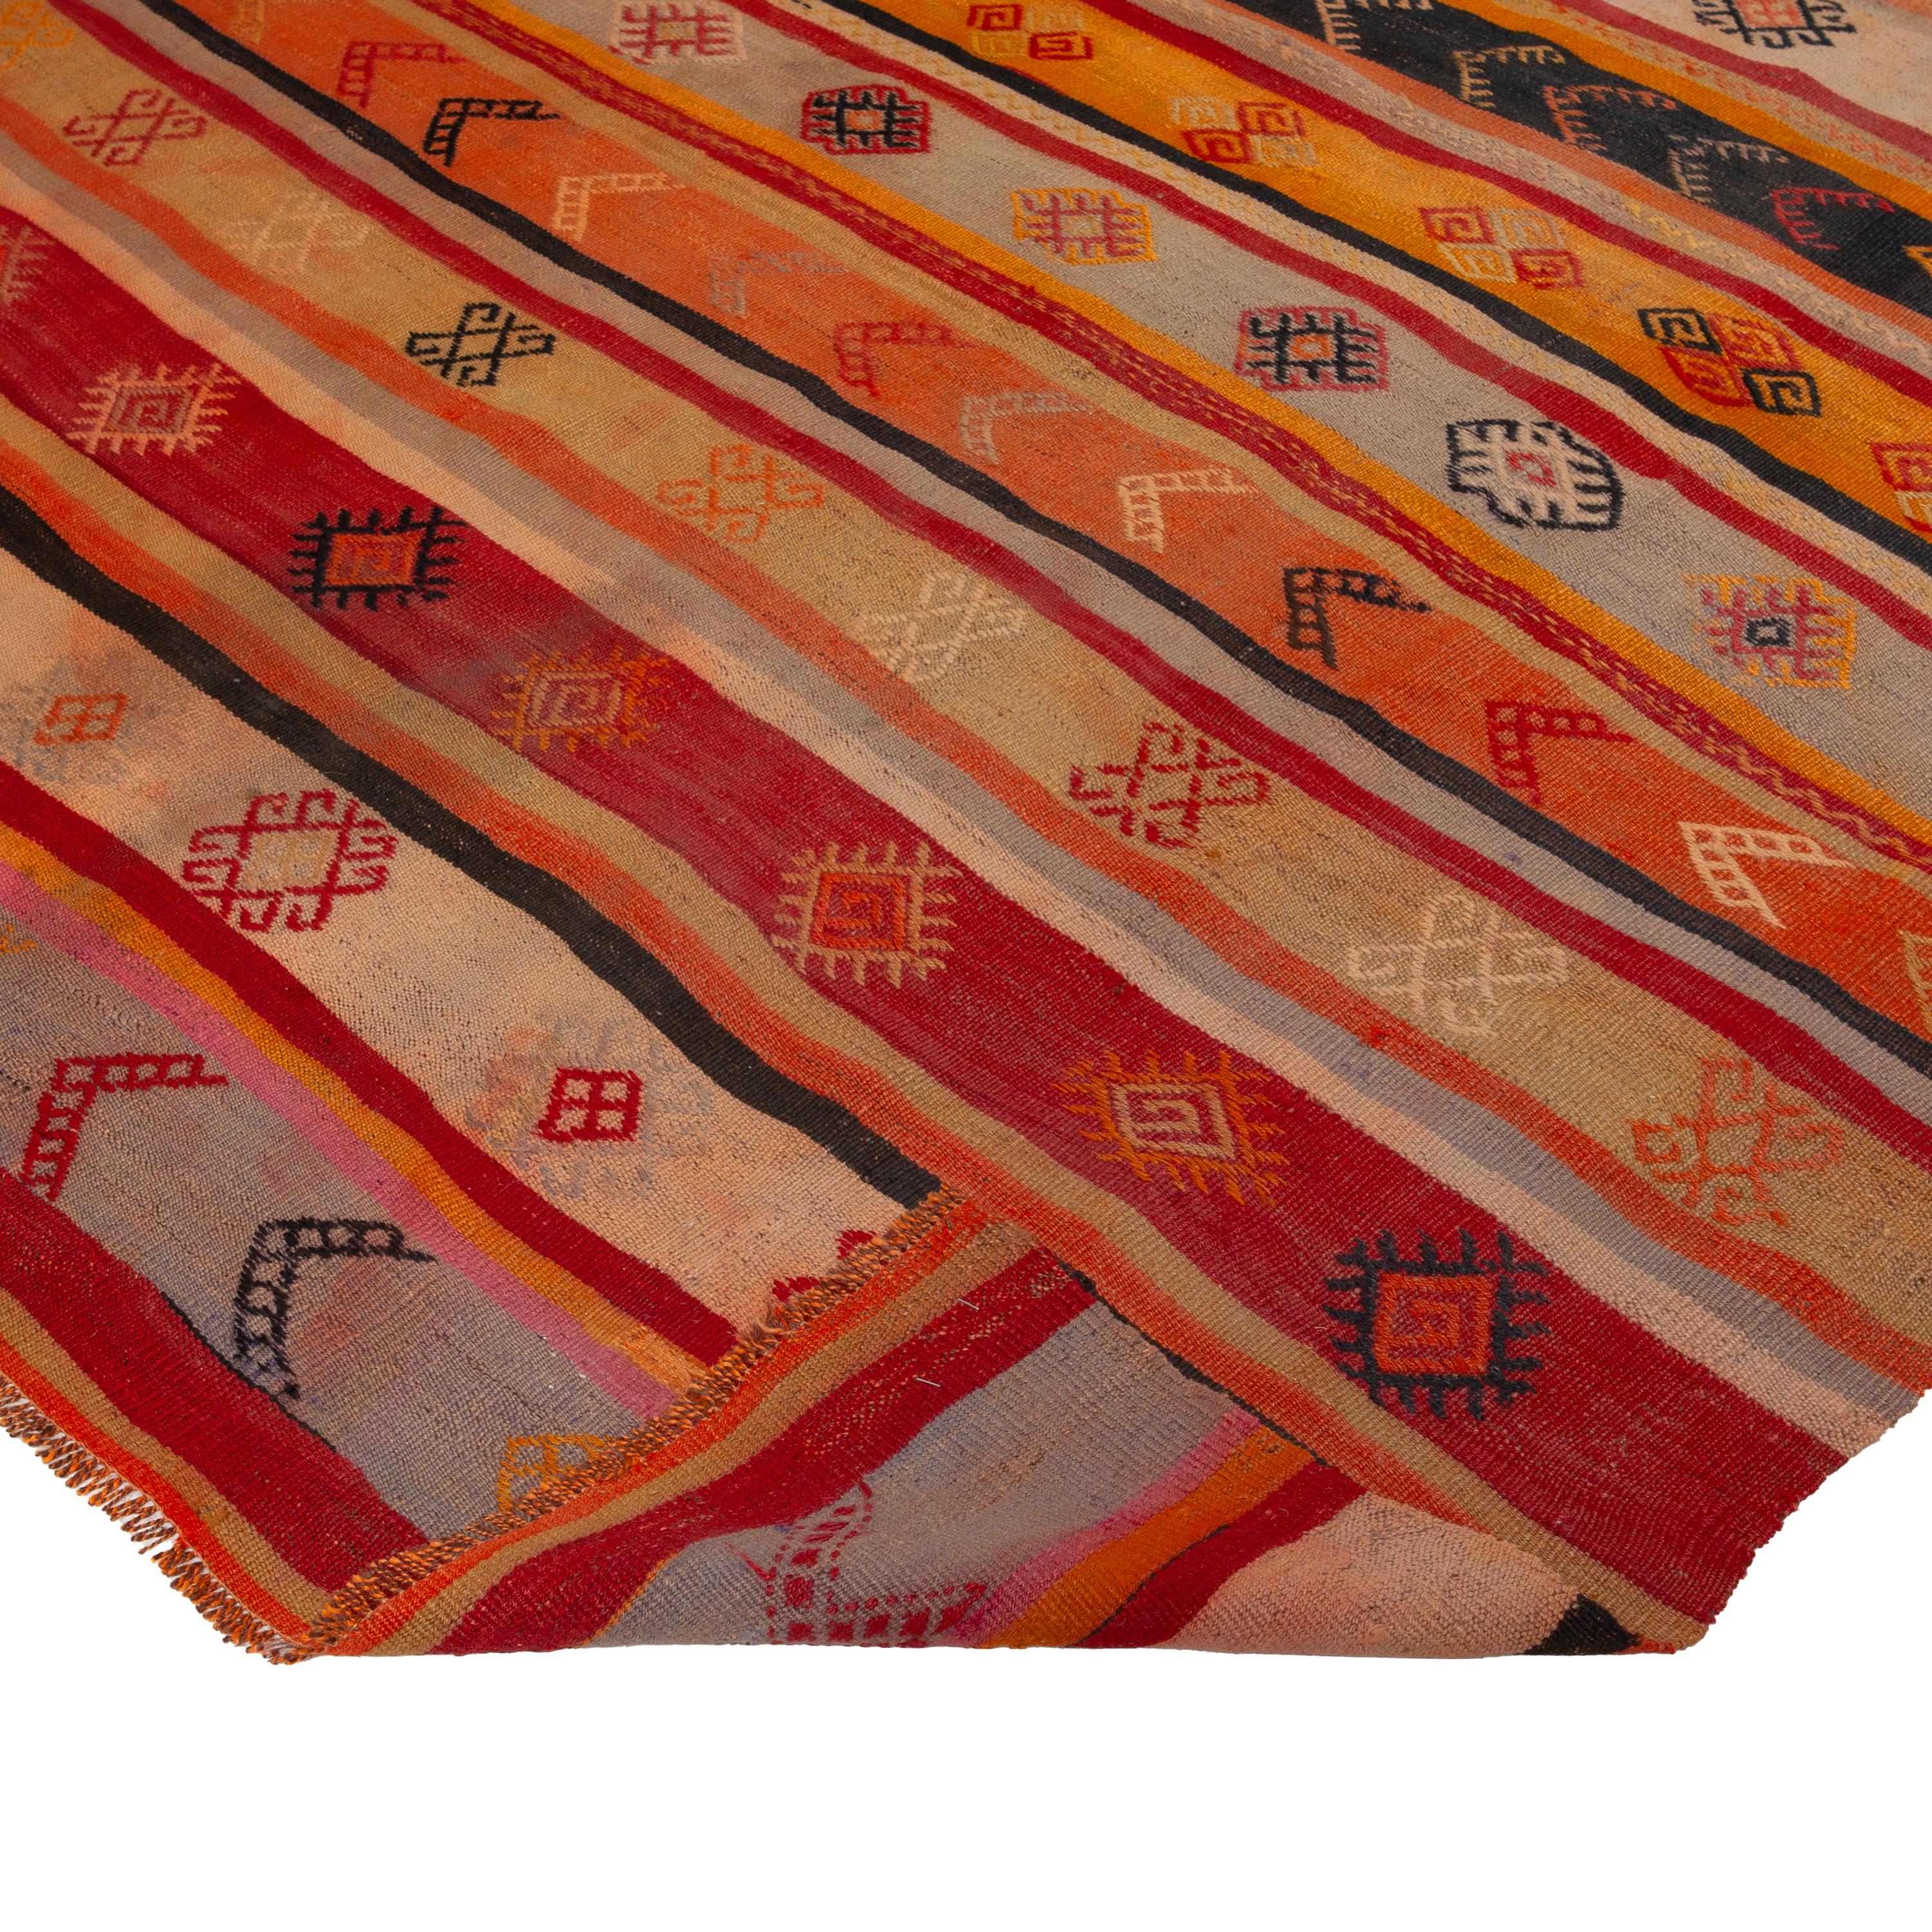 Hand-Woven abc carpet Red and Orange Vintage Wool Kilim Rug - 6'5